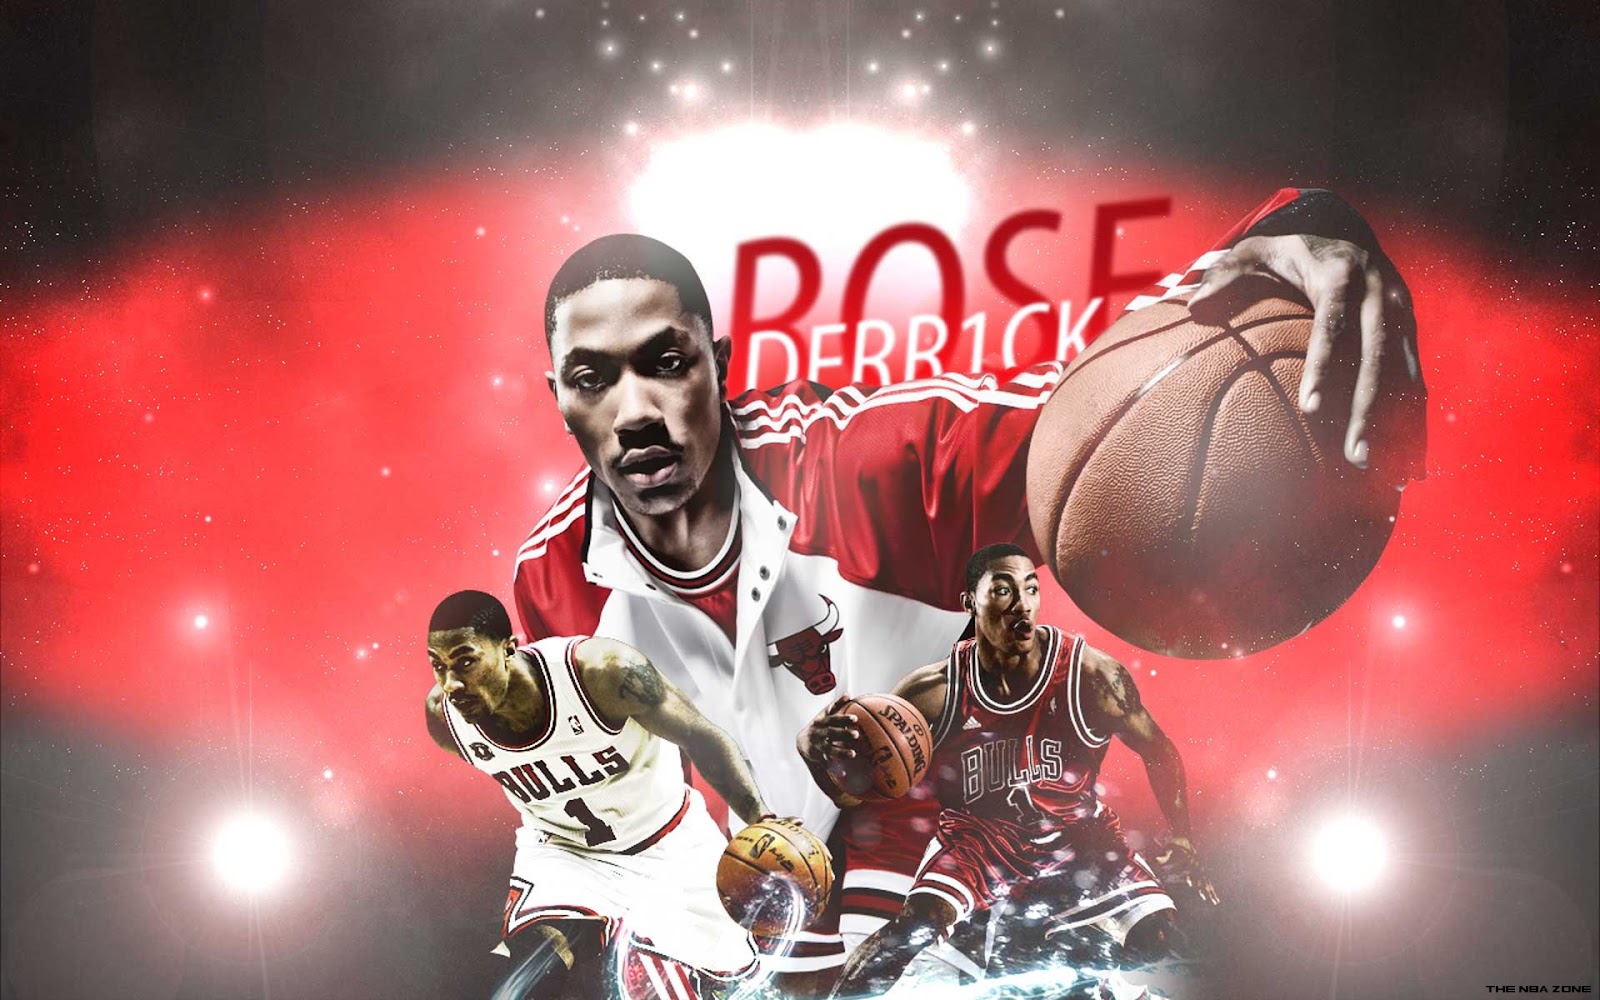 derrick rose wallpaper hd,giocatore di pallacanestro,super bowl,mosse di basket,schiacciata,prestazione